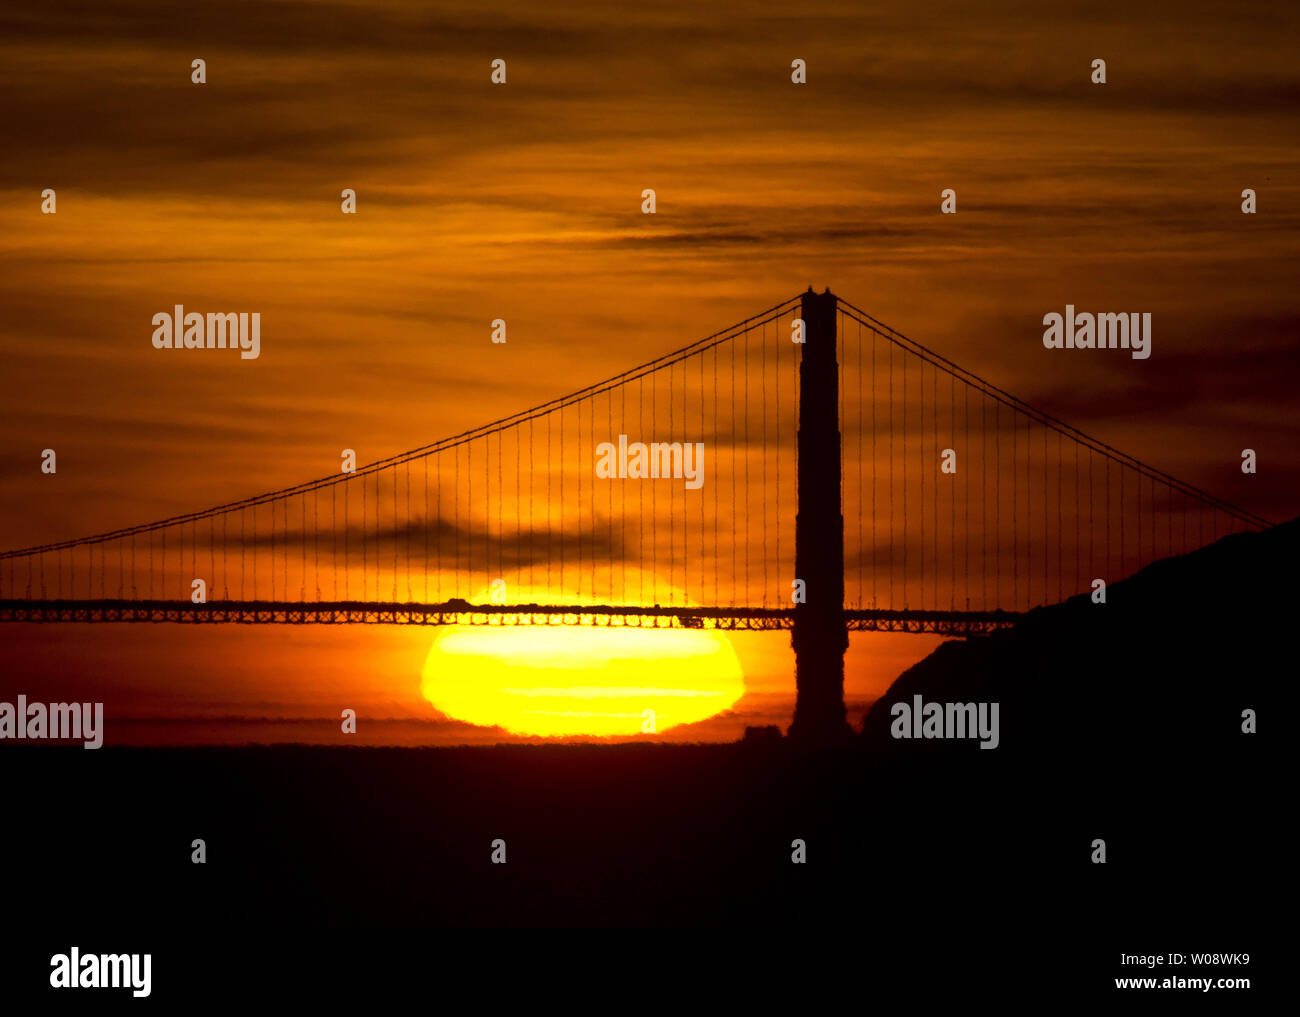 The sun sets behind the north tower of the Golden Gate Bridge on November 13, 2012 as seen from Berkeley, California.    UPI/Terry Schmitt Stock Photo